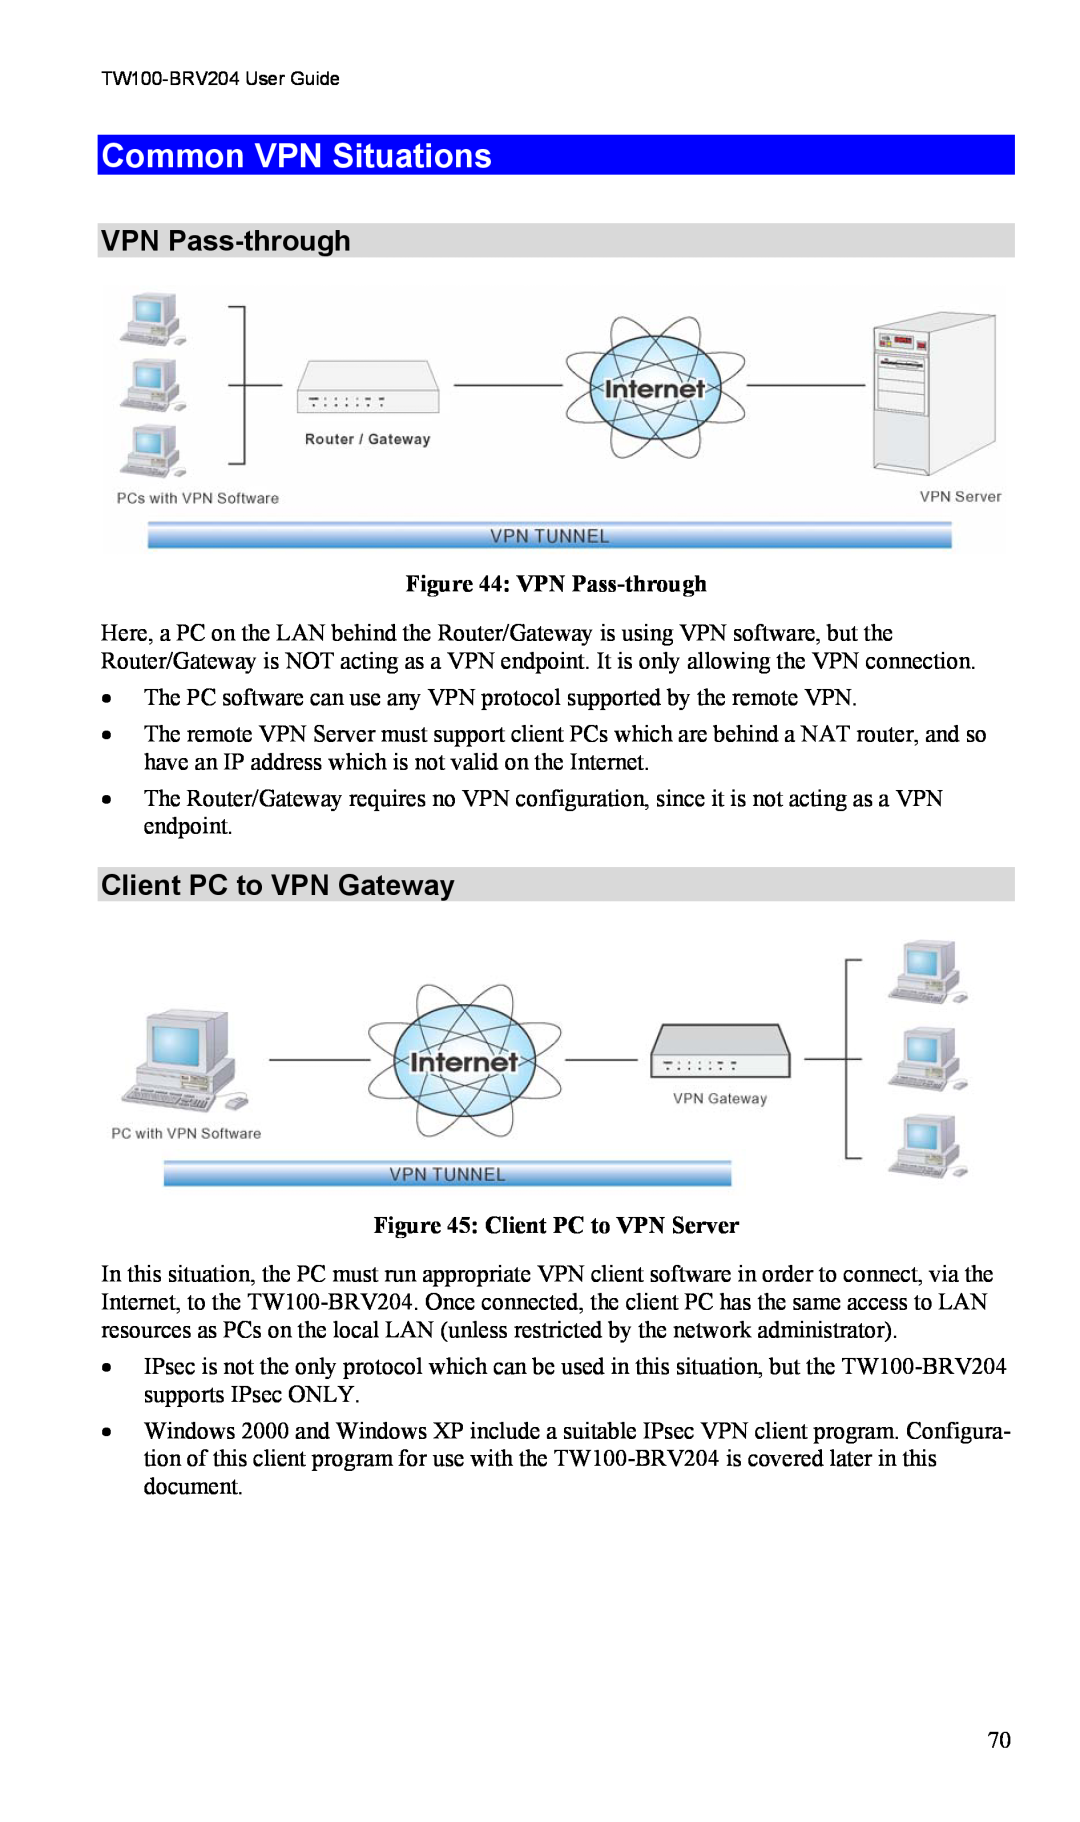 TRENDnet VPN Firewall Router, TW100-BRV204 manual Common VPN Situations, VPN Pass-through, Client PC to VPN Gateway 